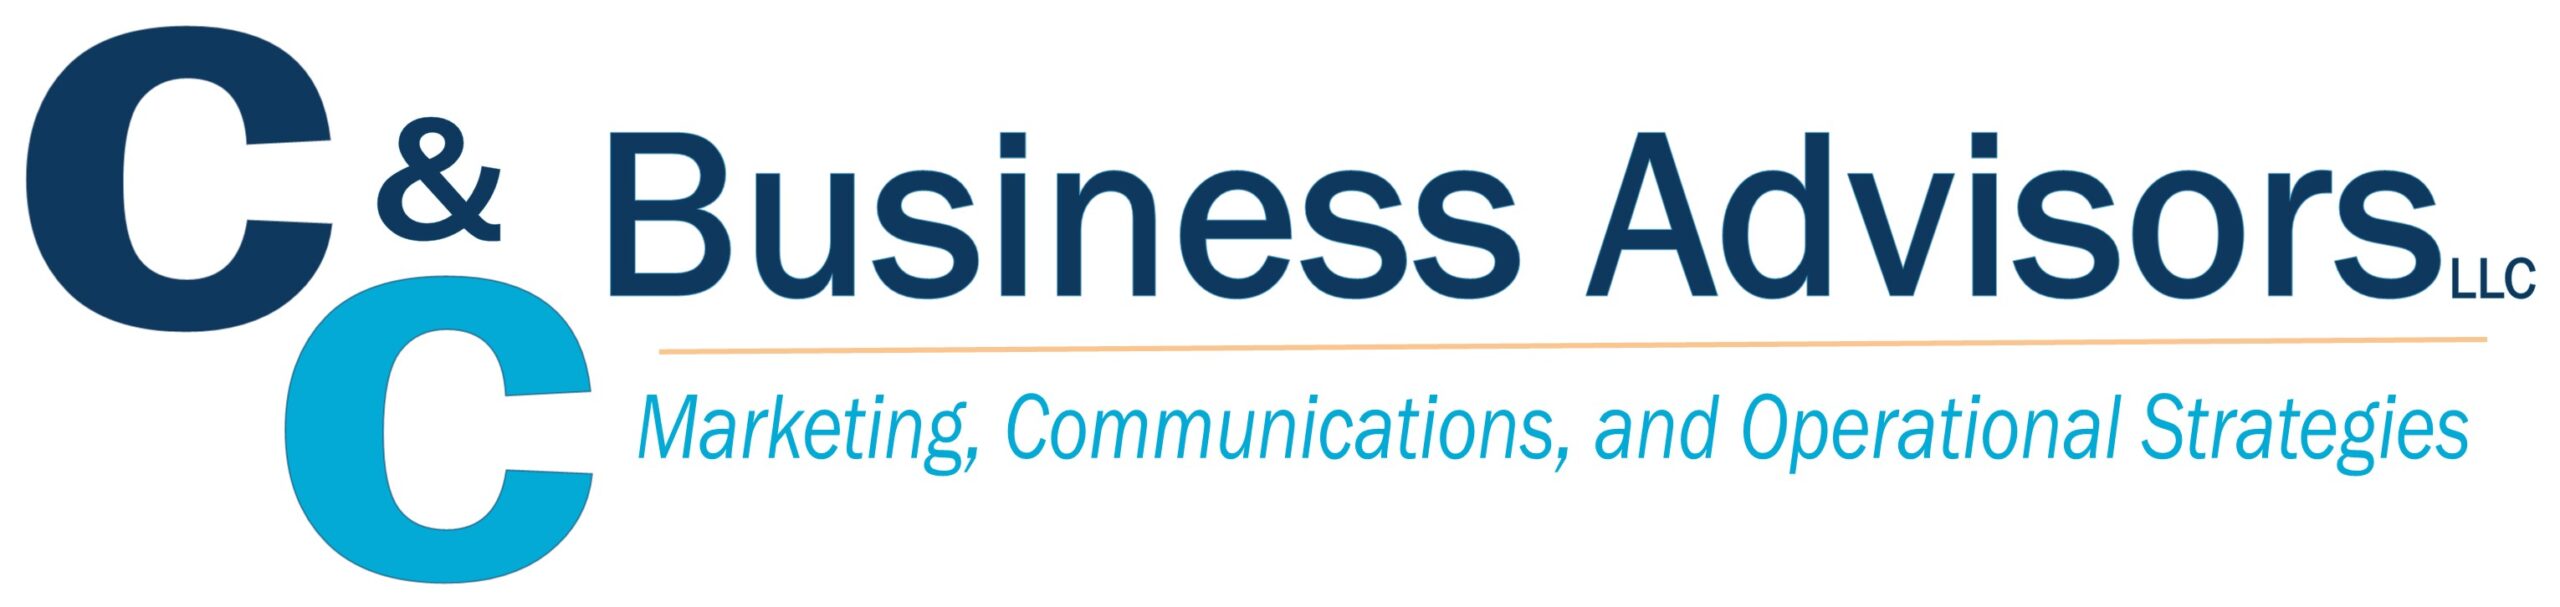 C & C Business Advisors. Marketing, Communications, and Operational Strategies to maximize profits.